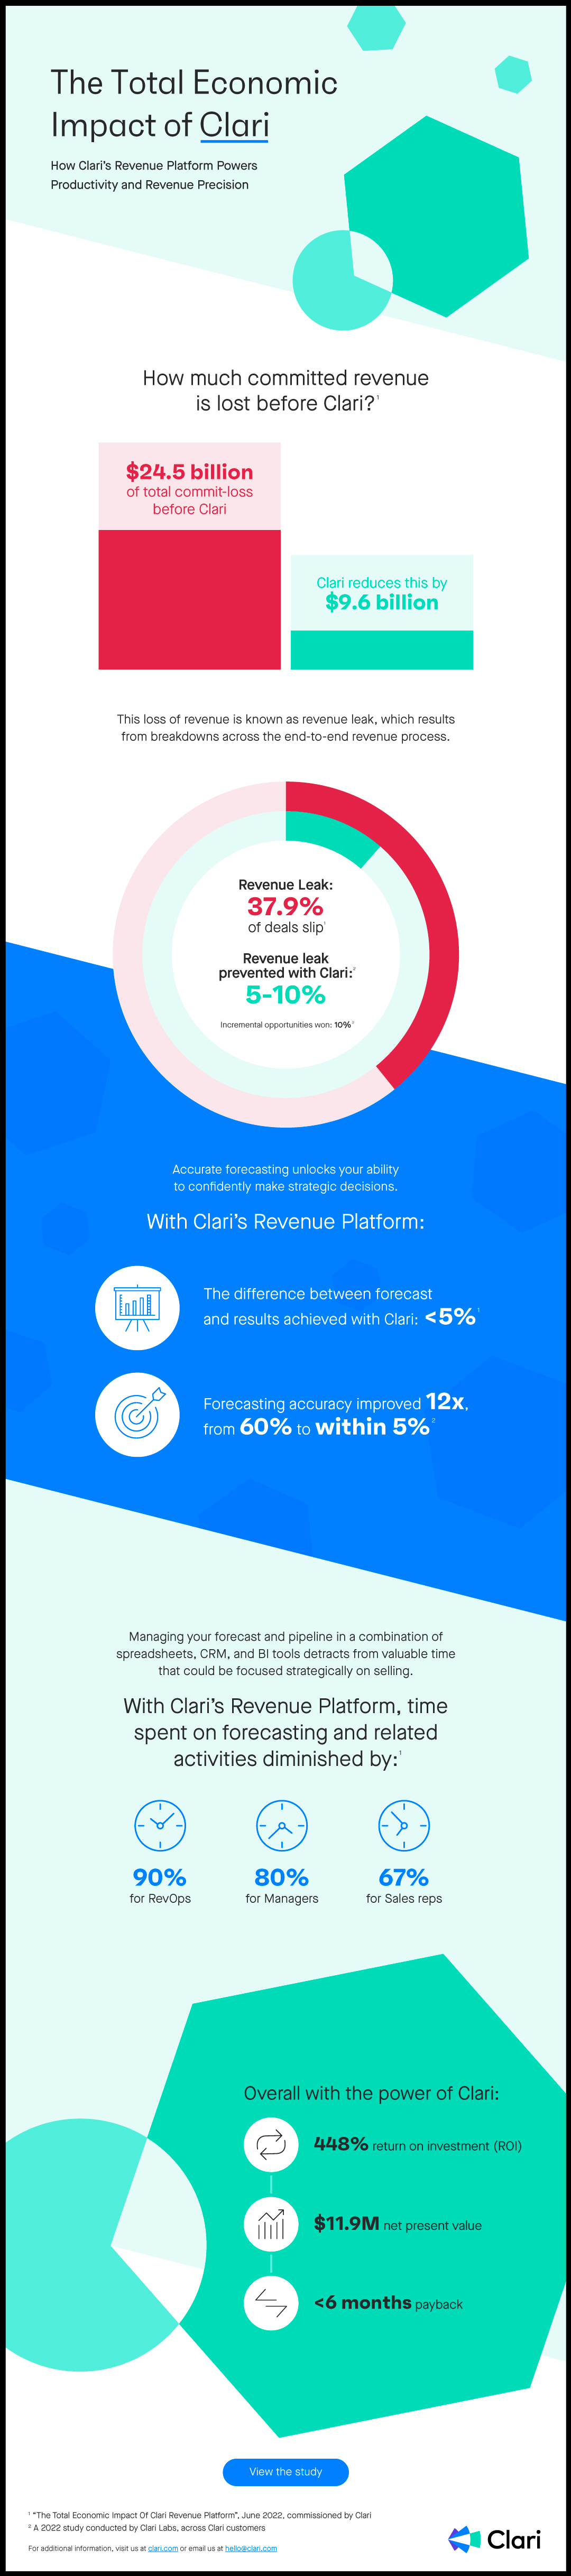 The Total Economic Impact of Clari infographic